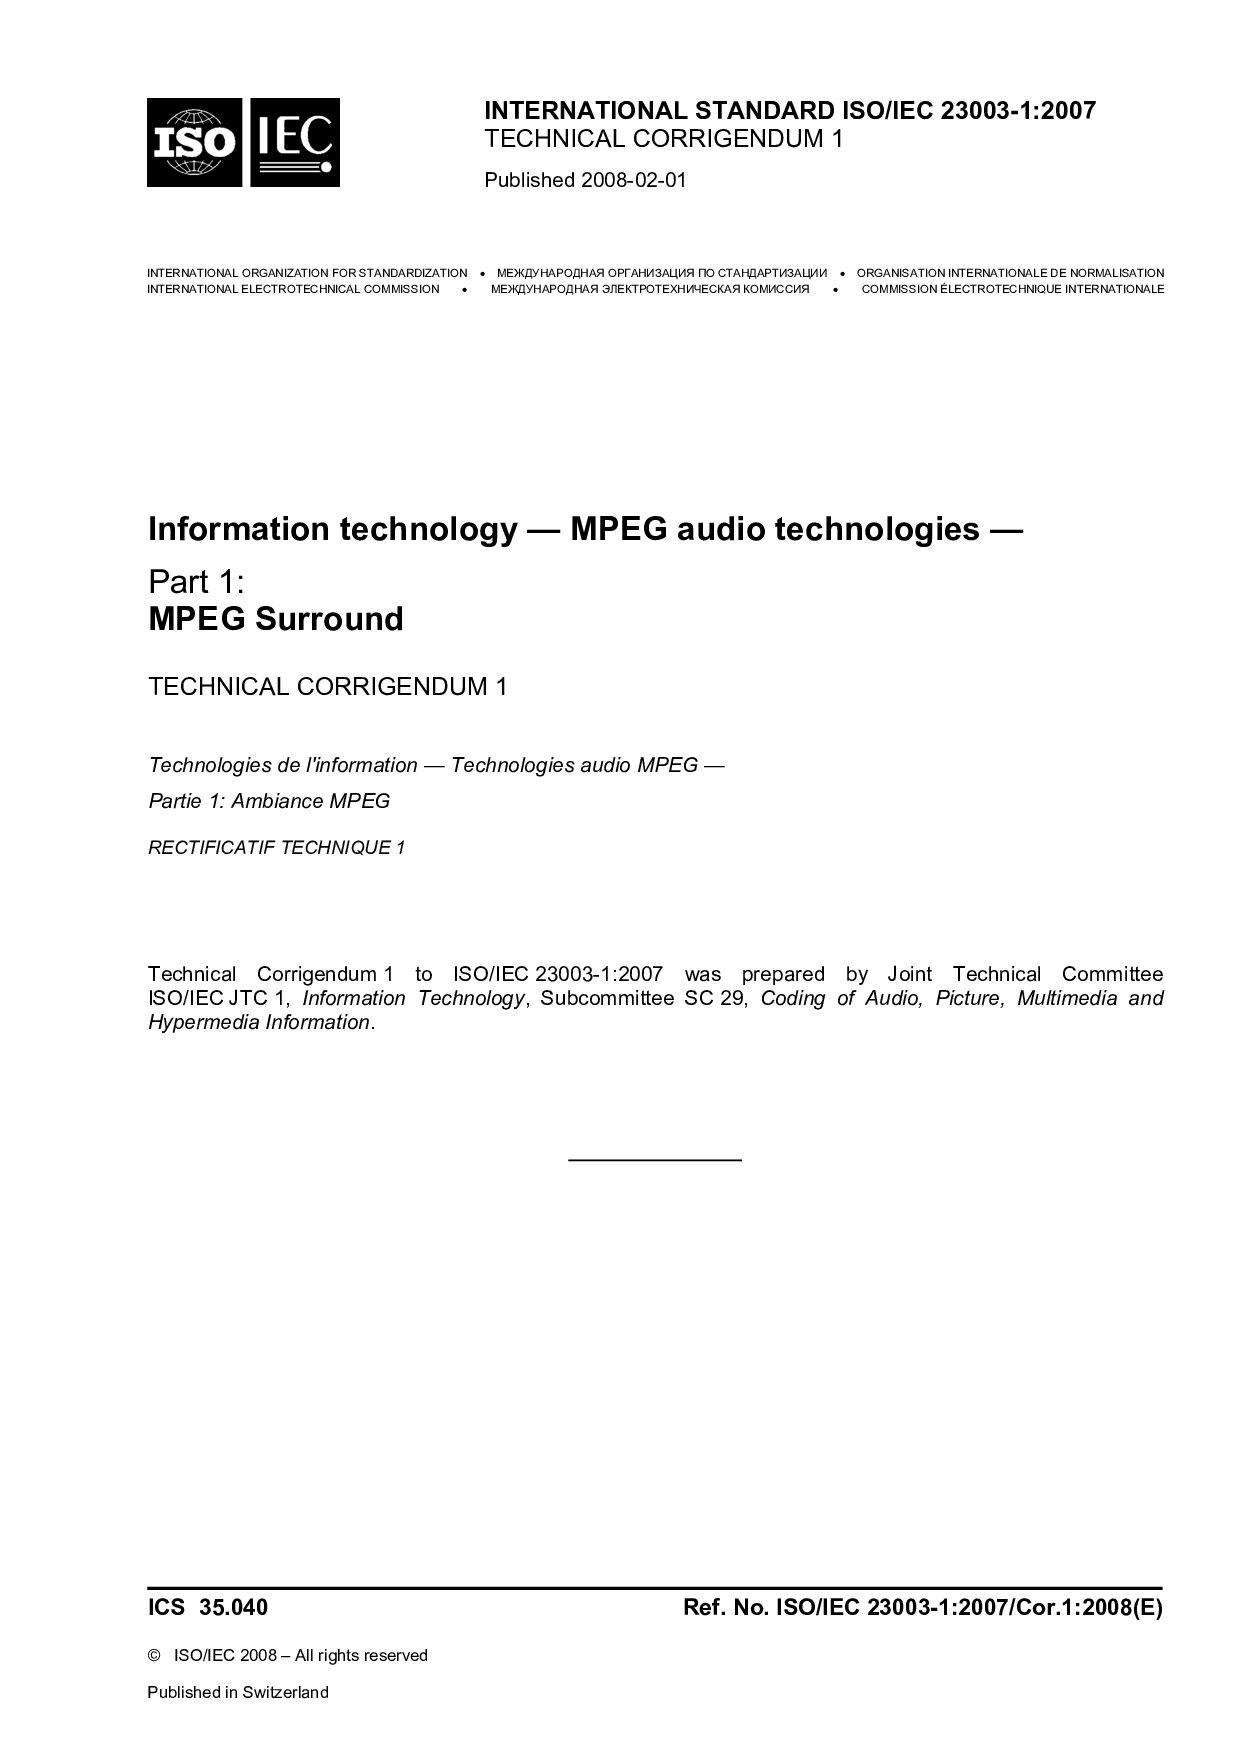 ISO/IEC 23003-1:2007/Cor 1:2008